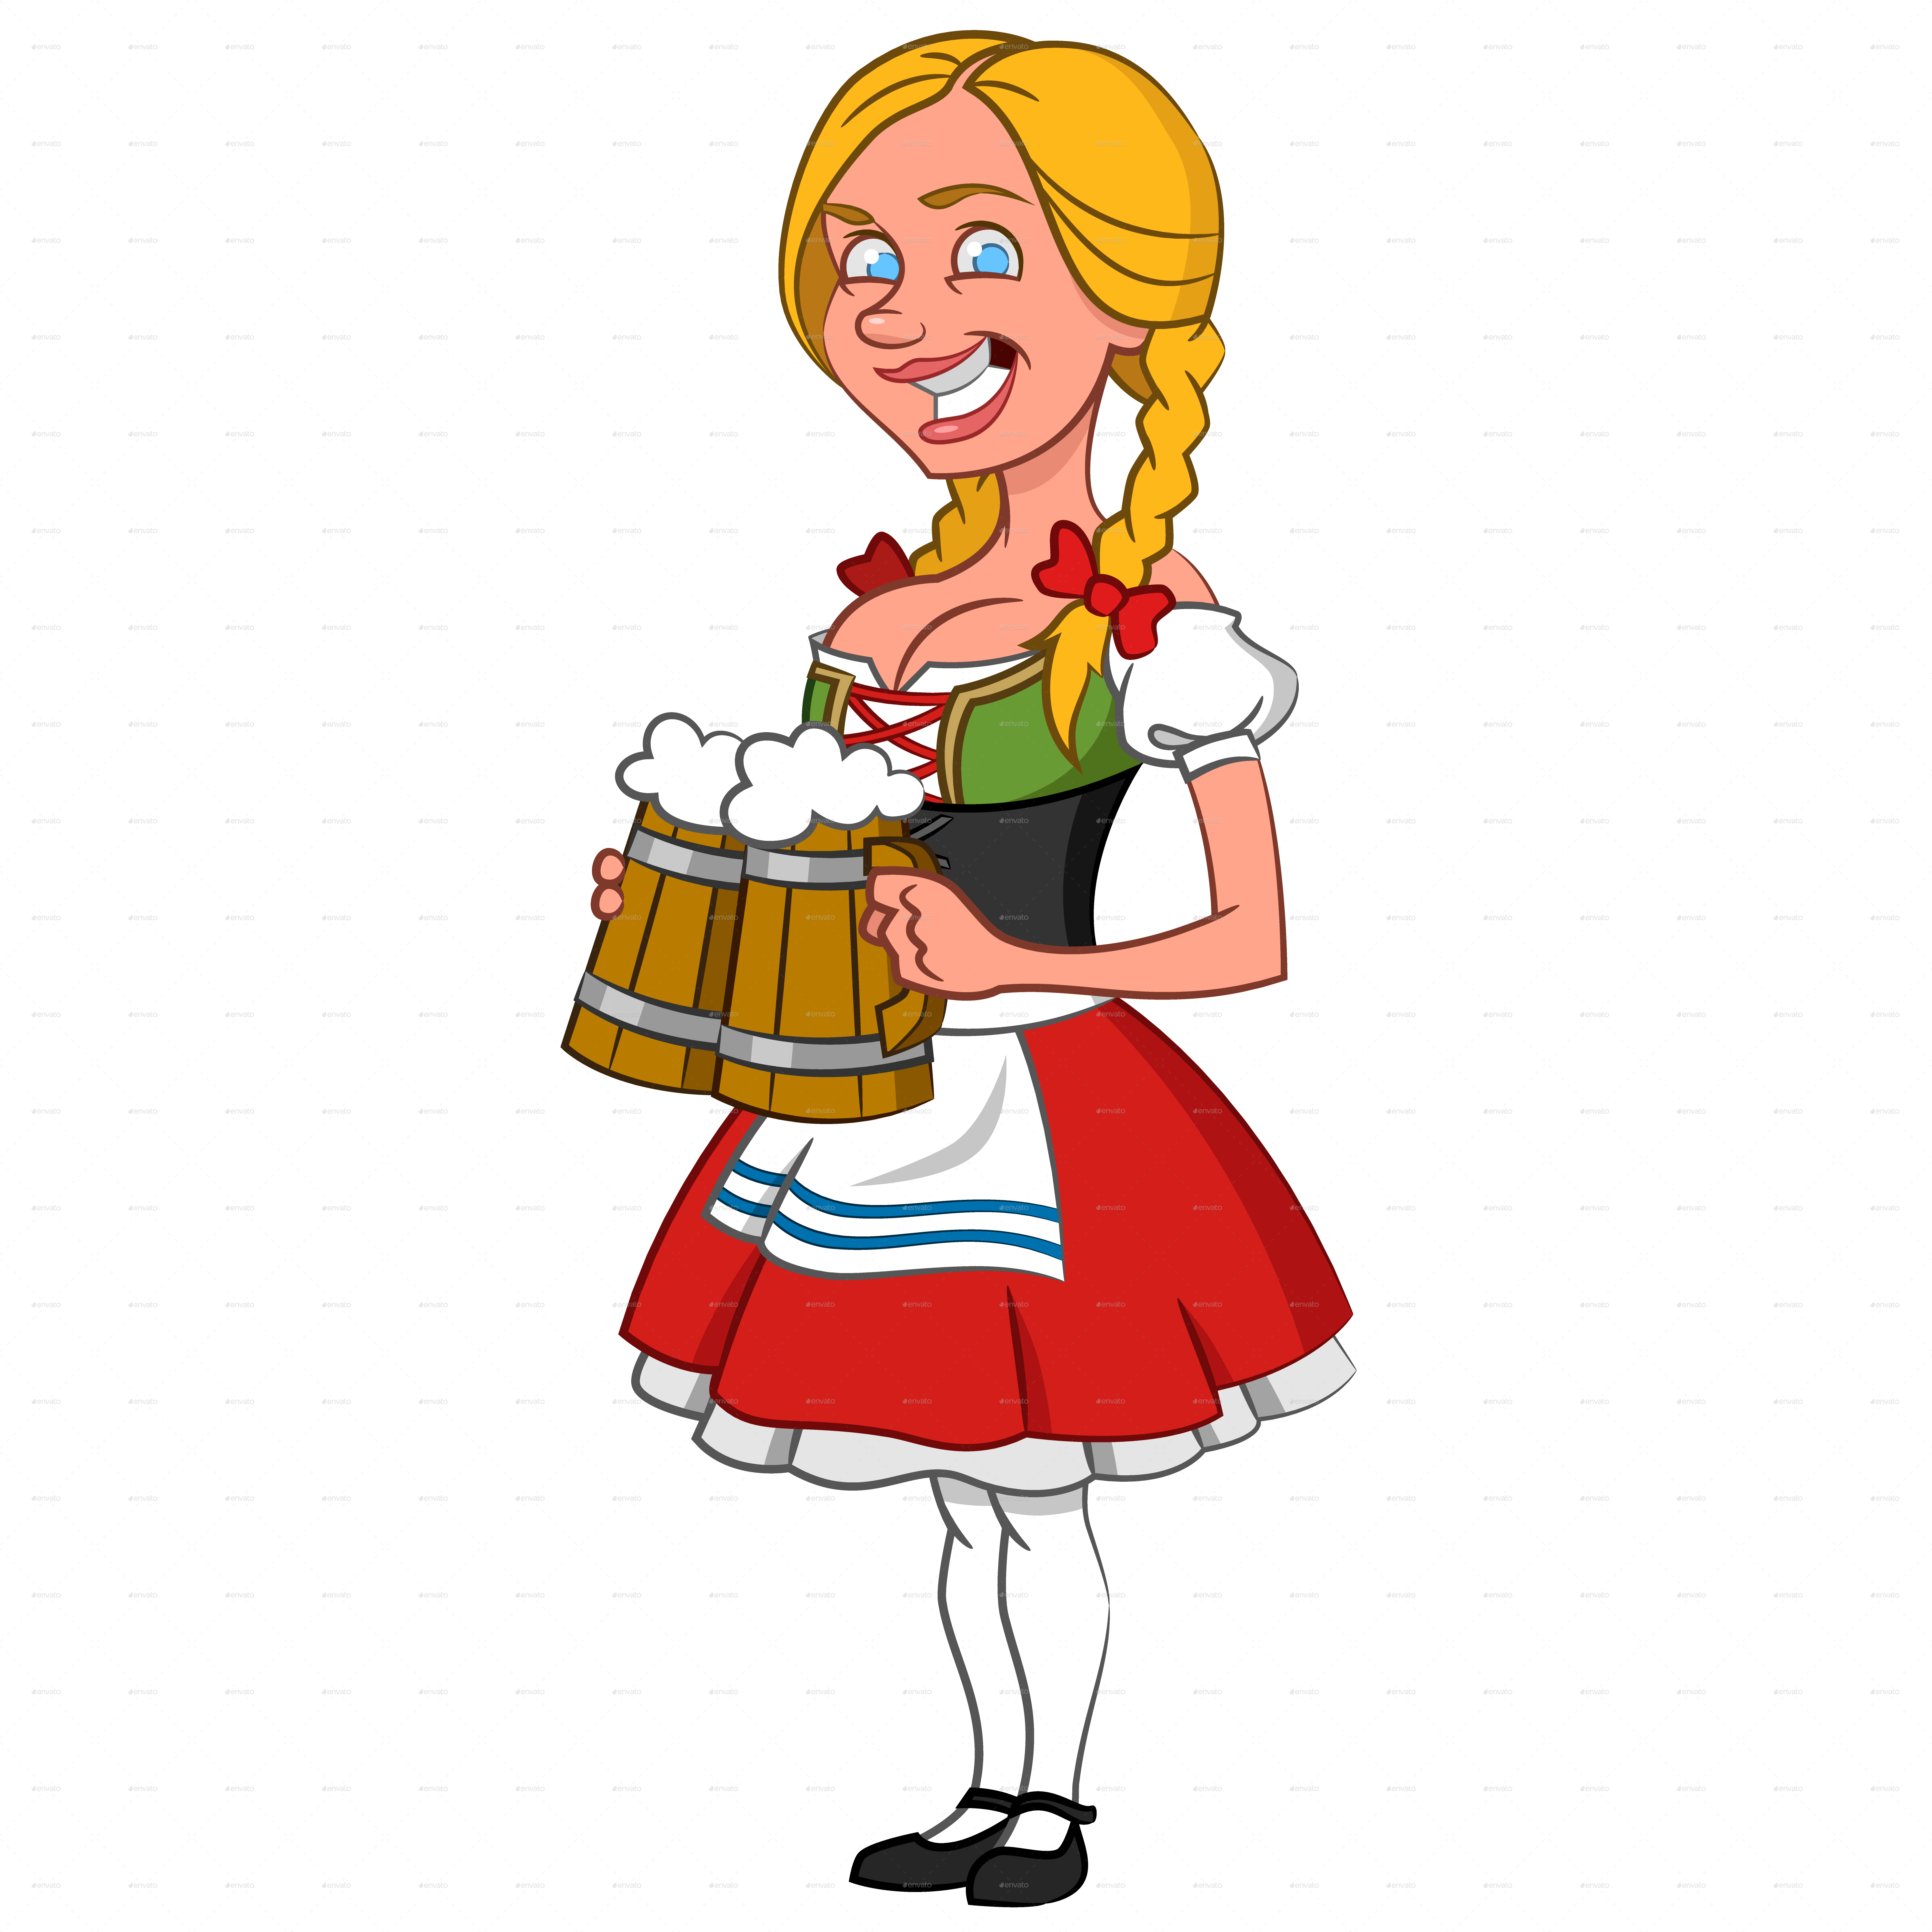 Cartoon A Cartoon Of A Woman Holding Beer Mugs